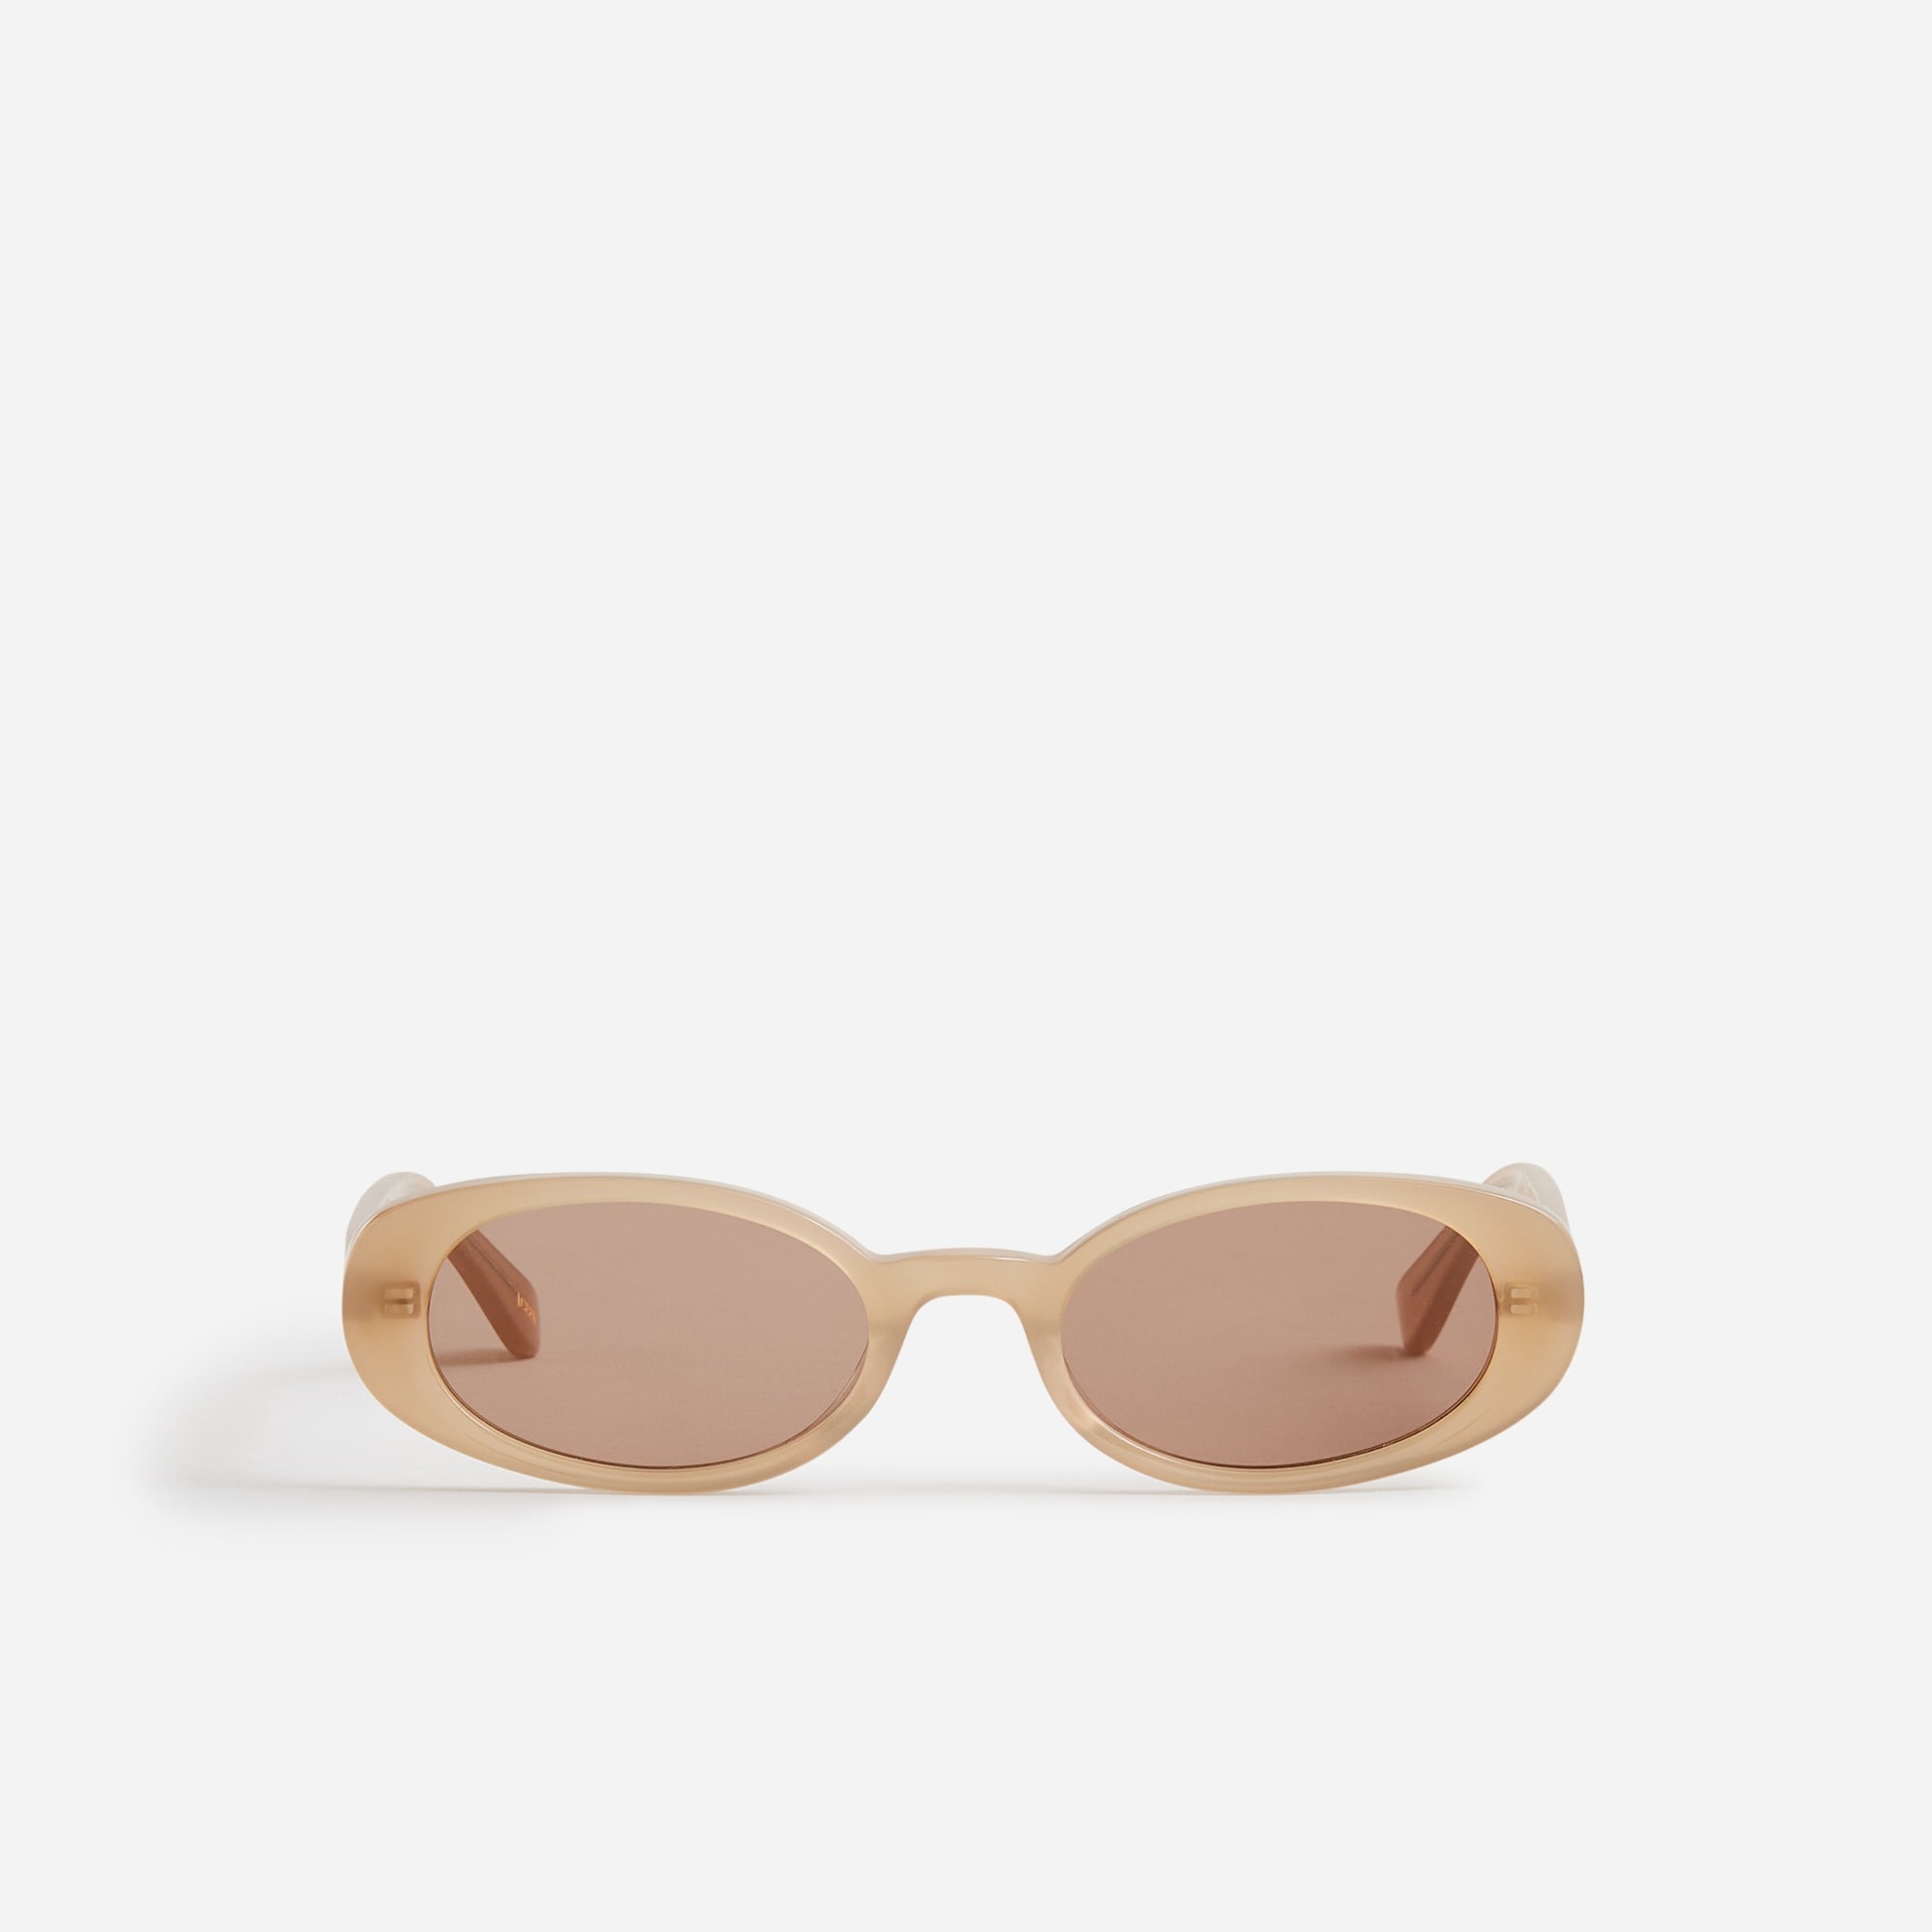 Jcrew Beachfront sunglasses